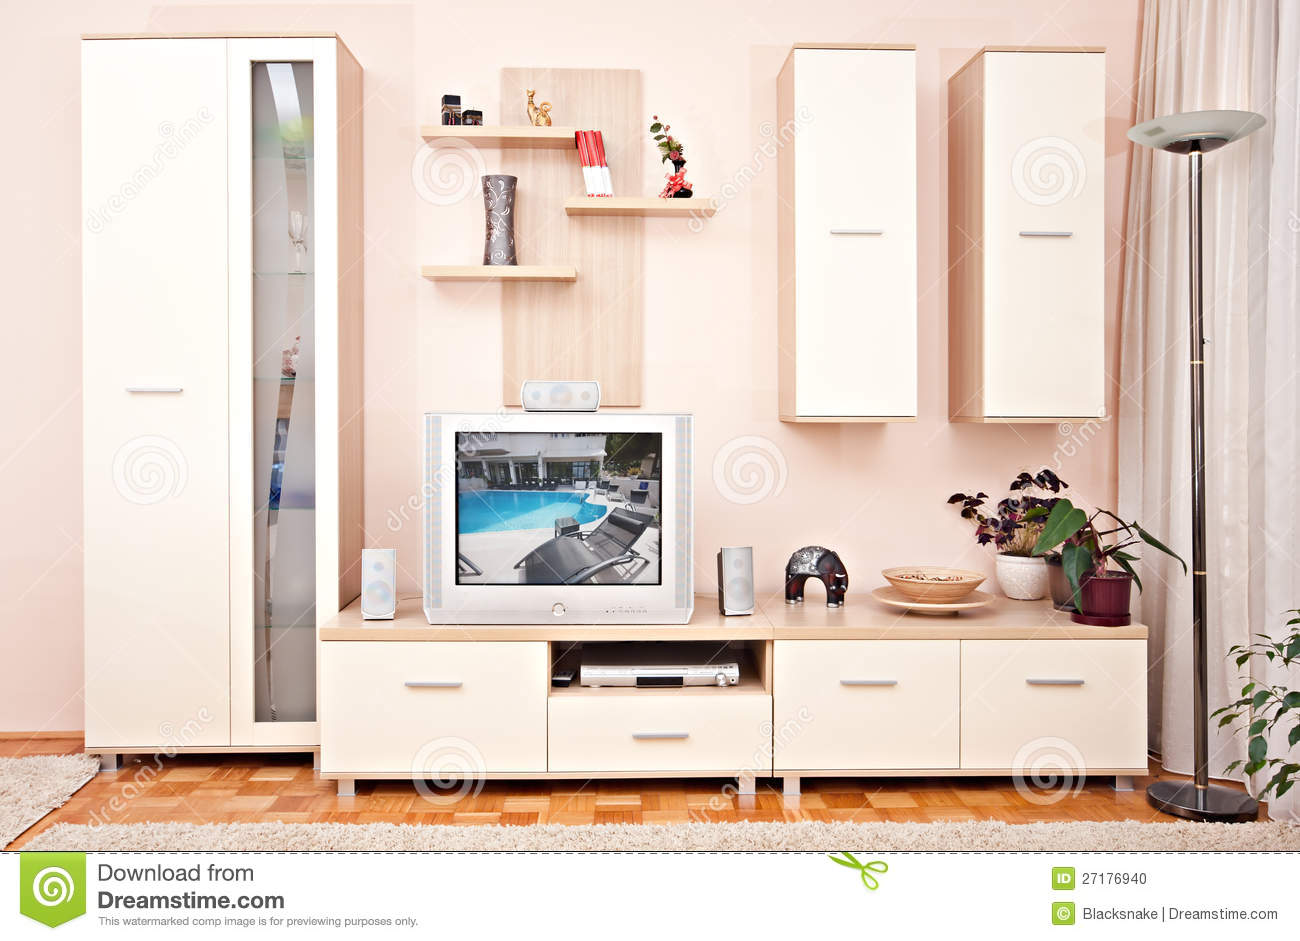 Bedroom Furniture Television set photo - 3